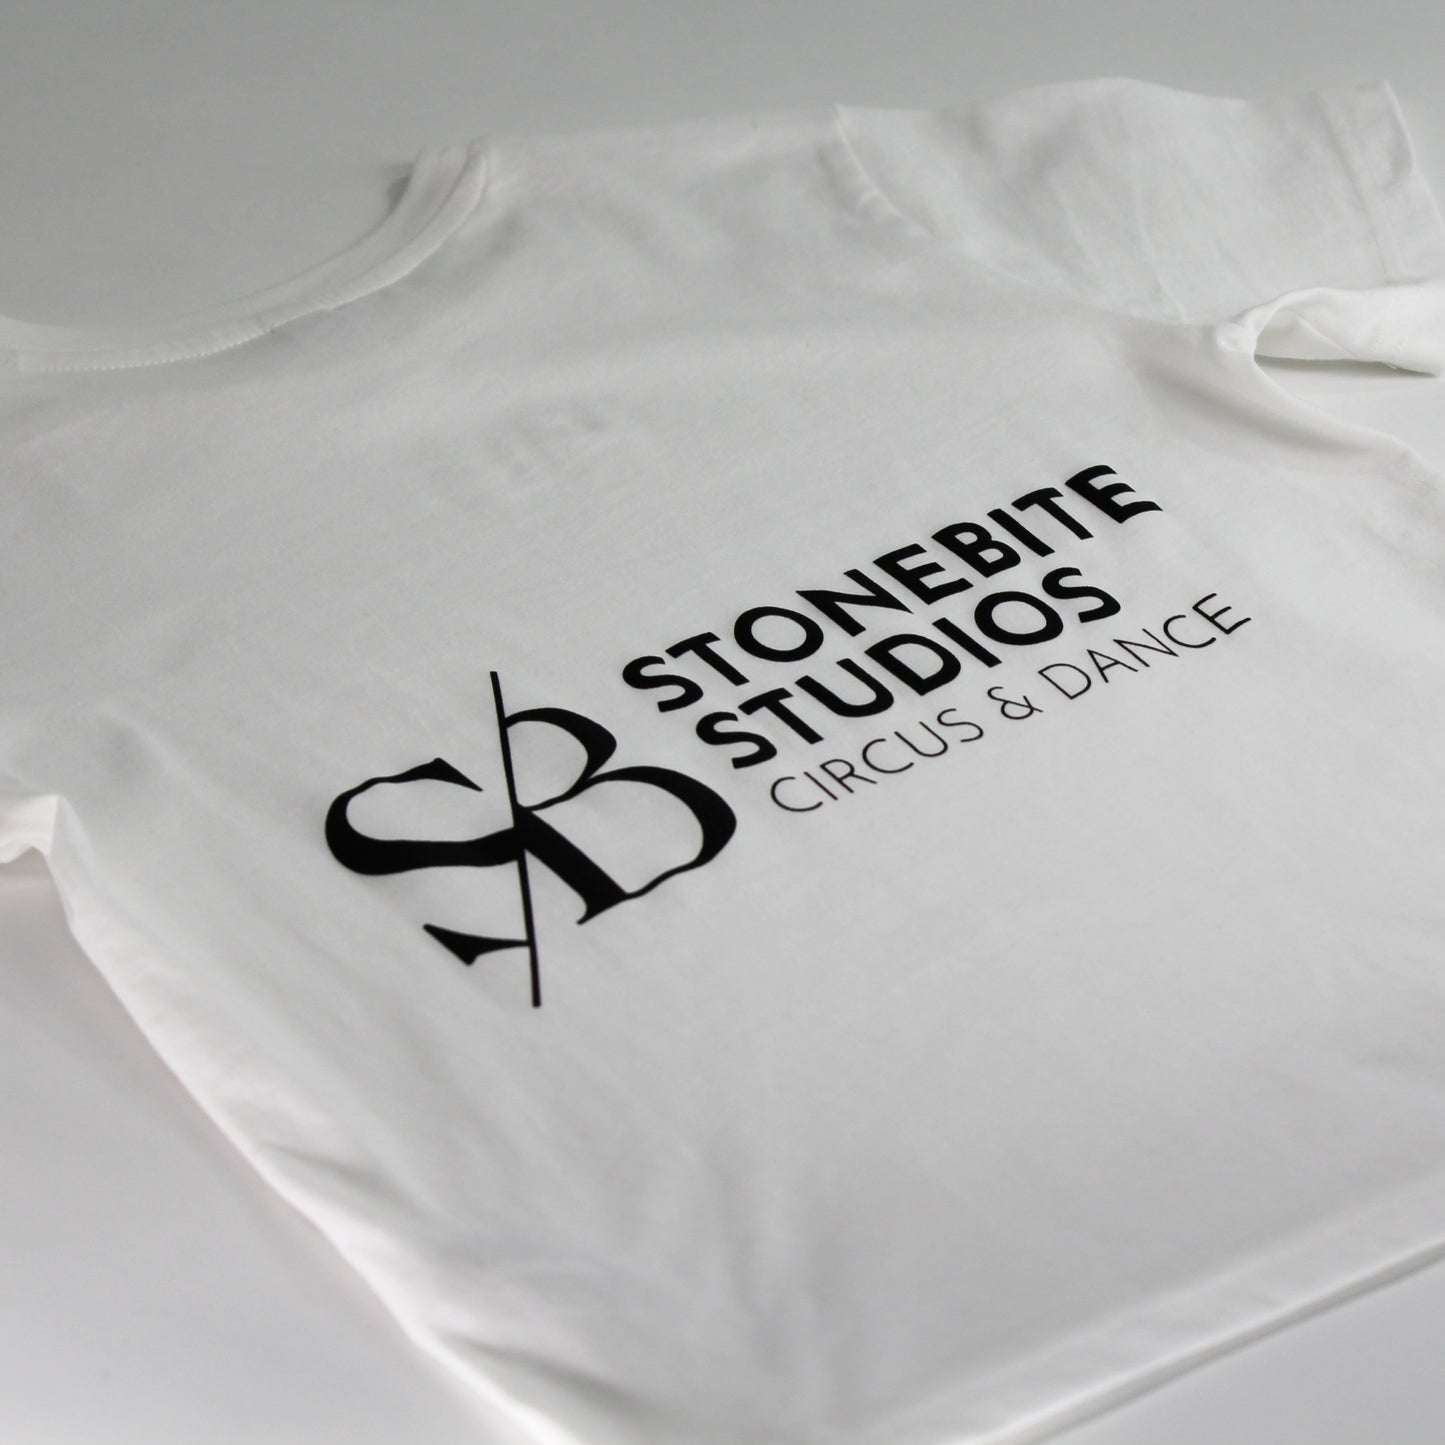 STONEBITE T-Shirt